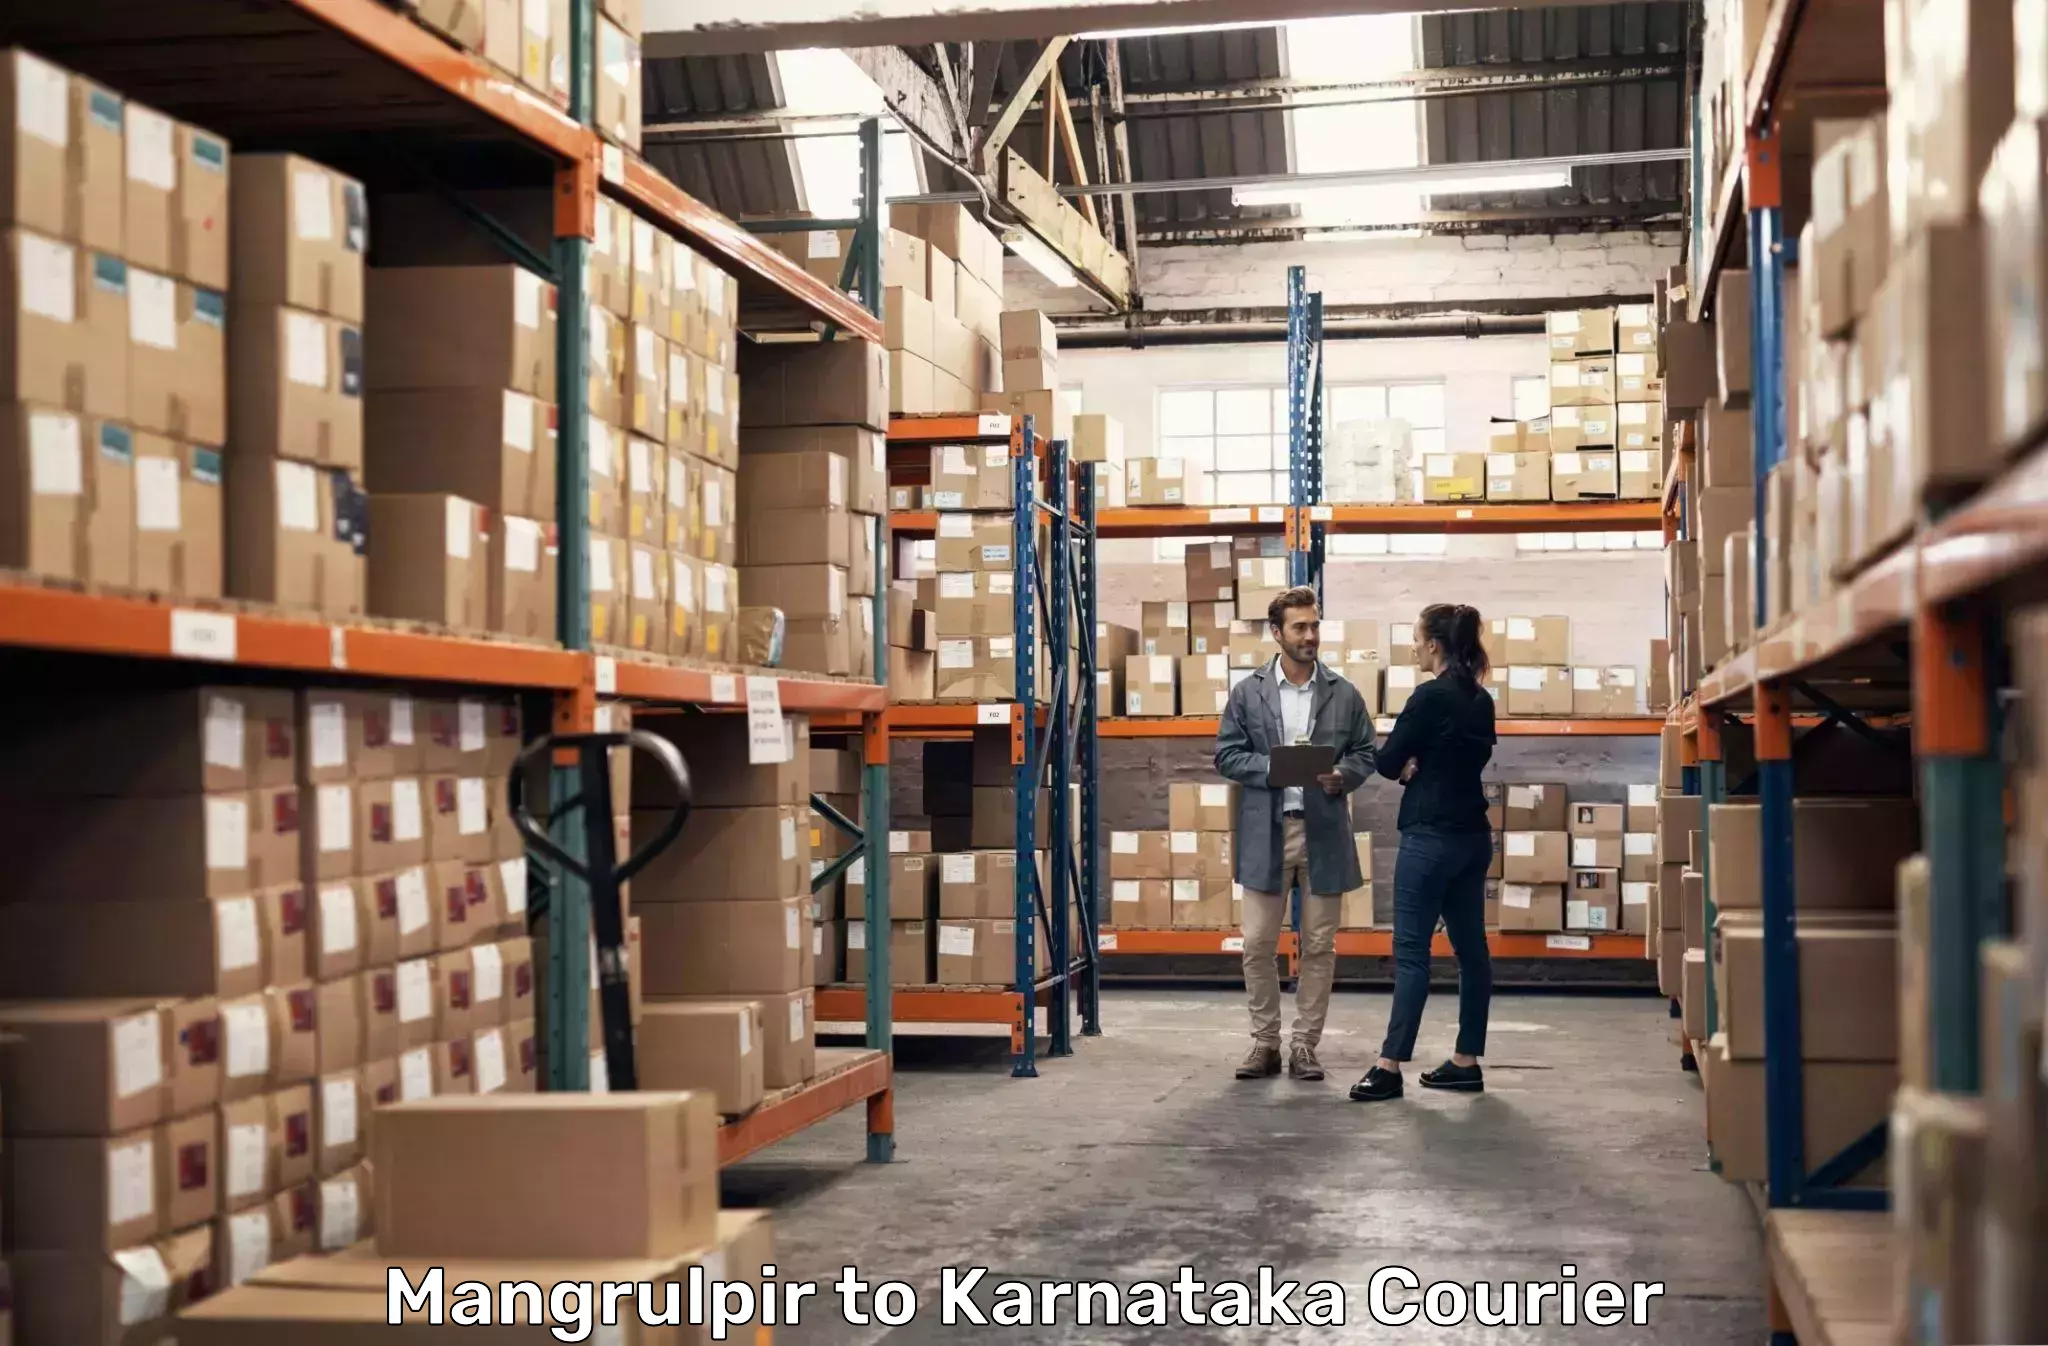 Courier service innovation Mangrulpir to Belthangady